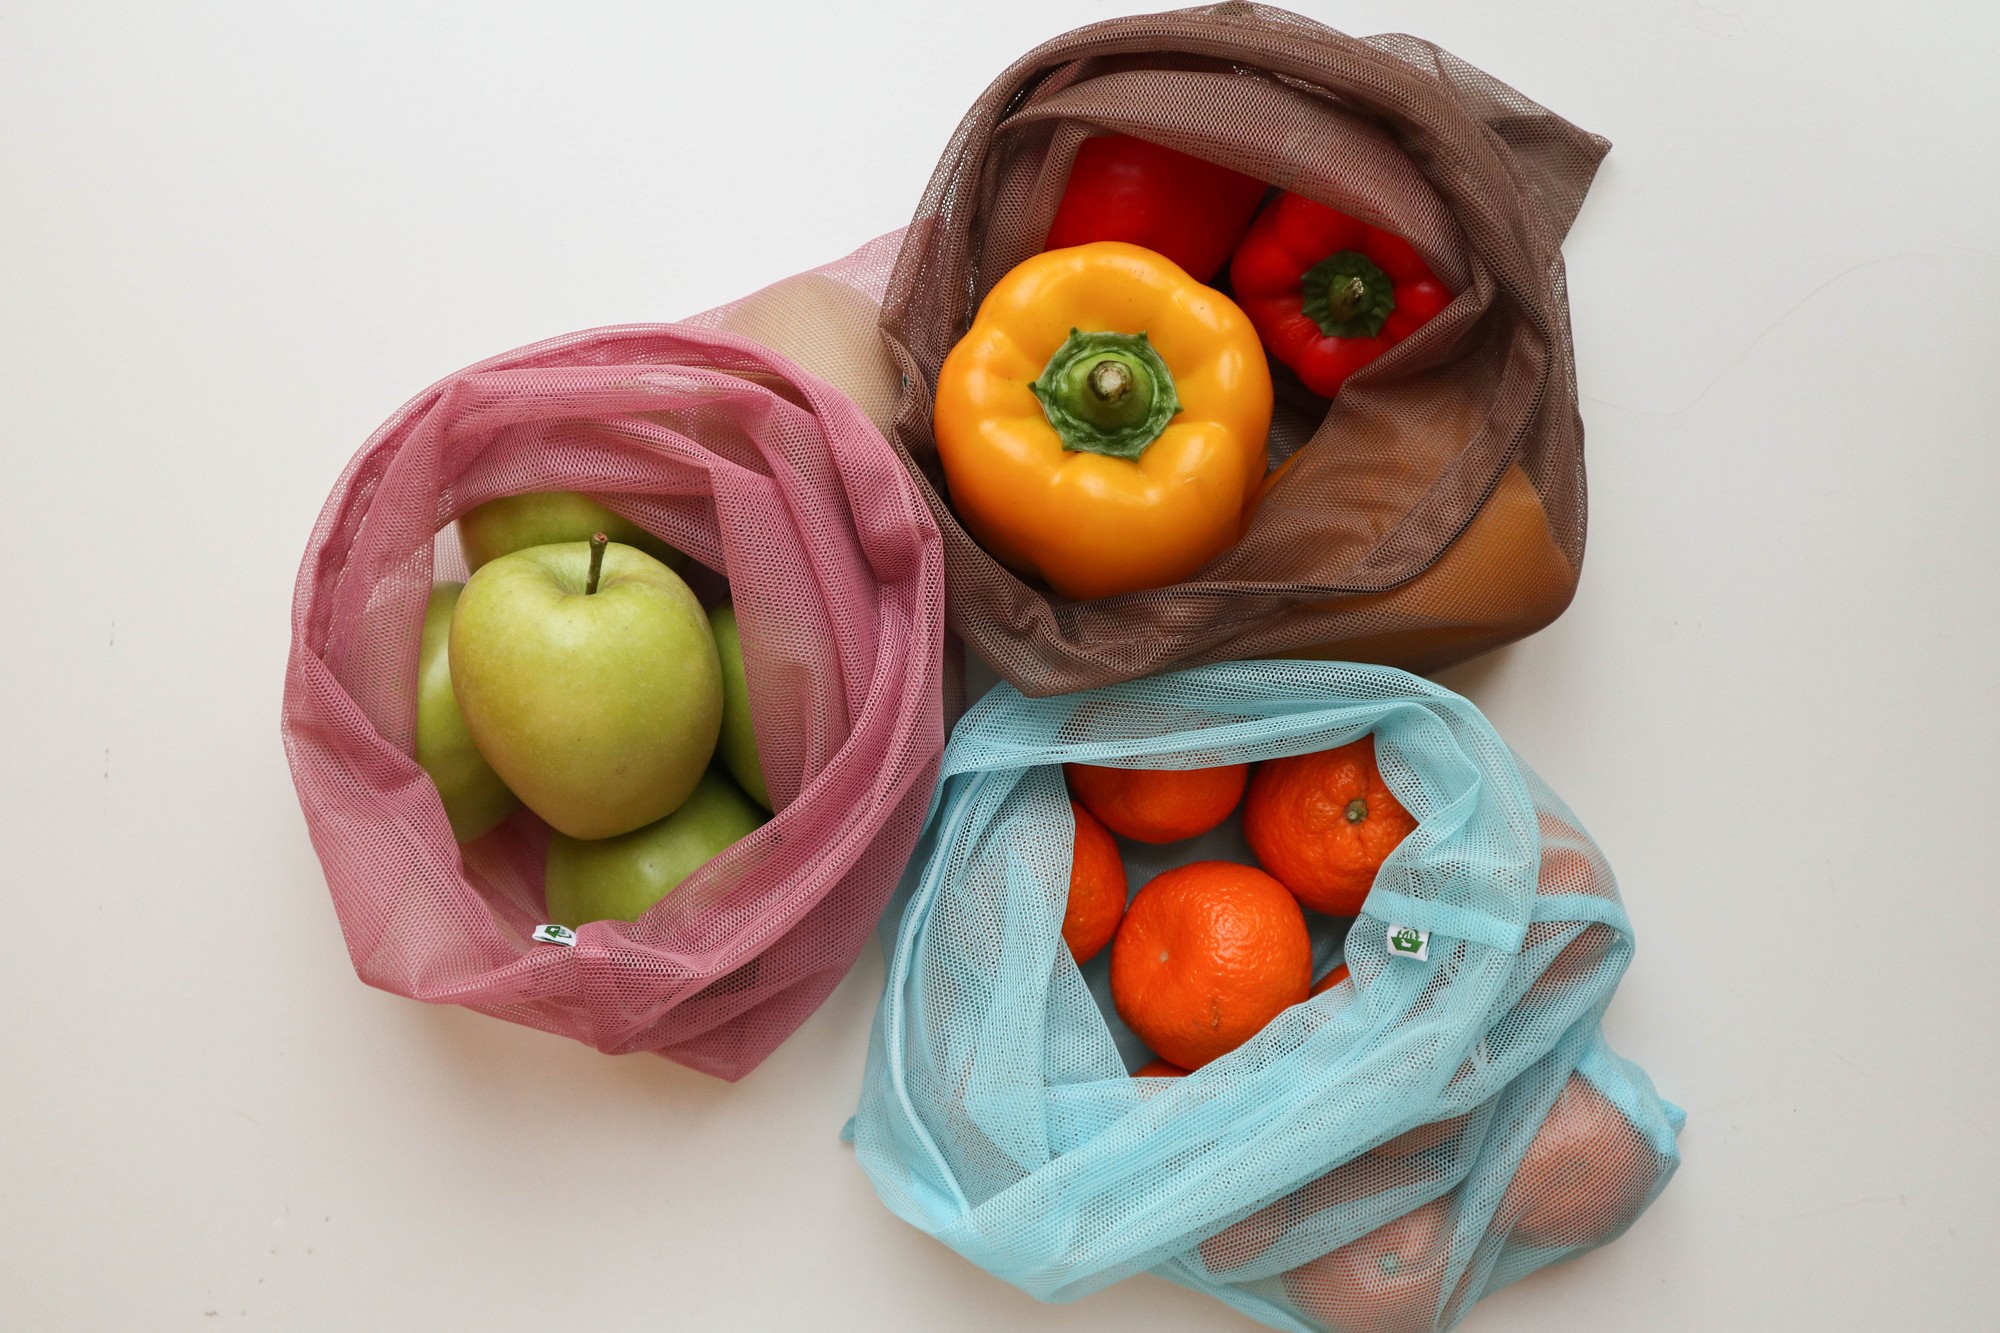 Set of infinitely reusable shopping bags